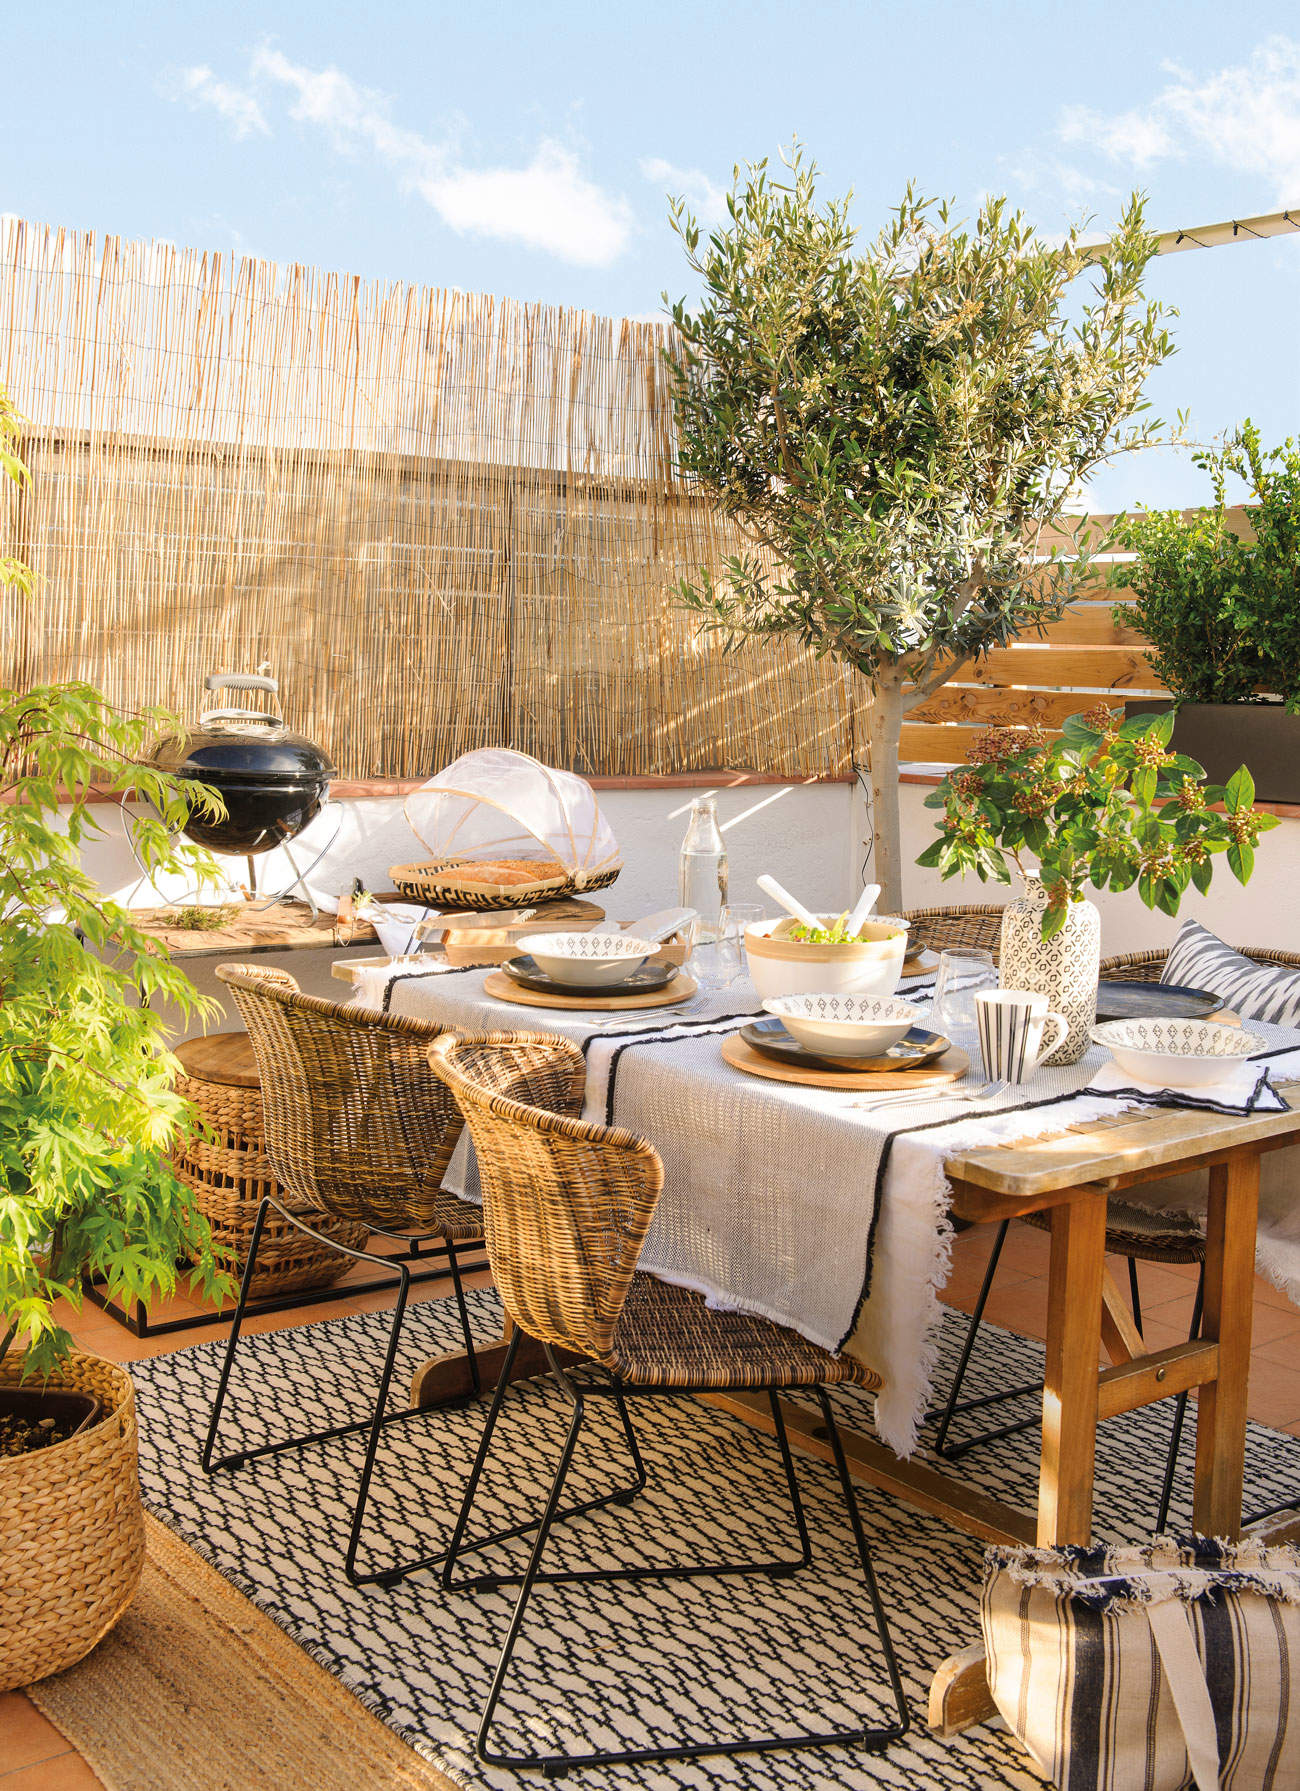 Terraza con encanto con mesa de madera, sillas de fibras, barbacoa y olivo 00458334